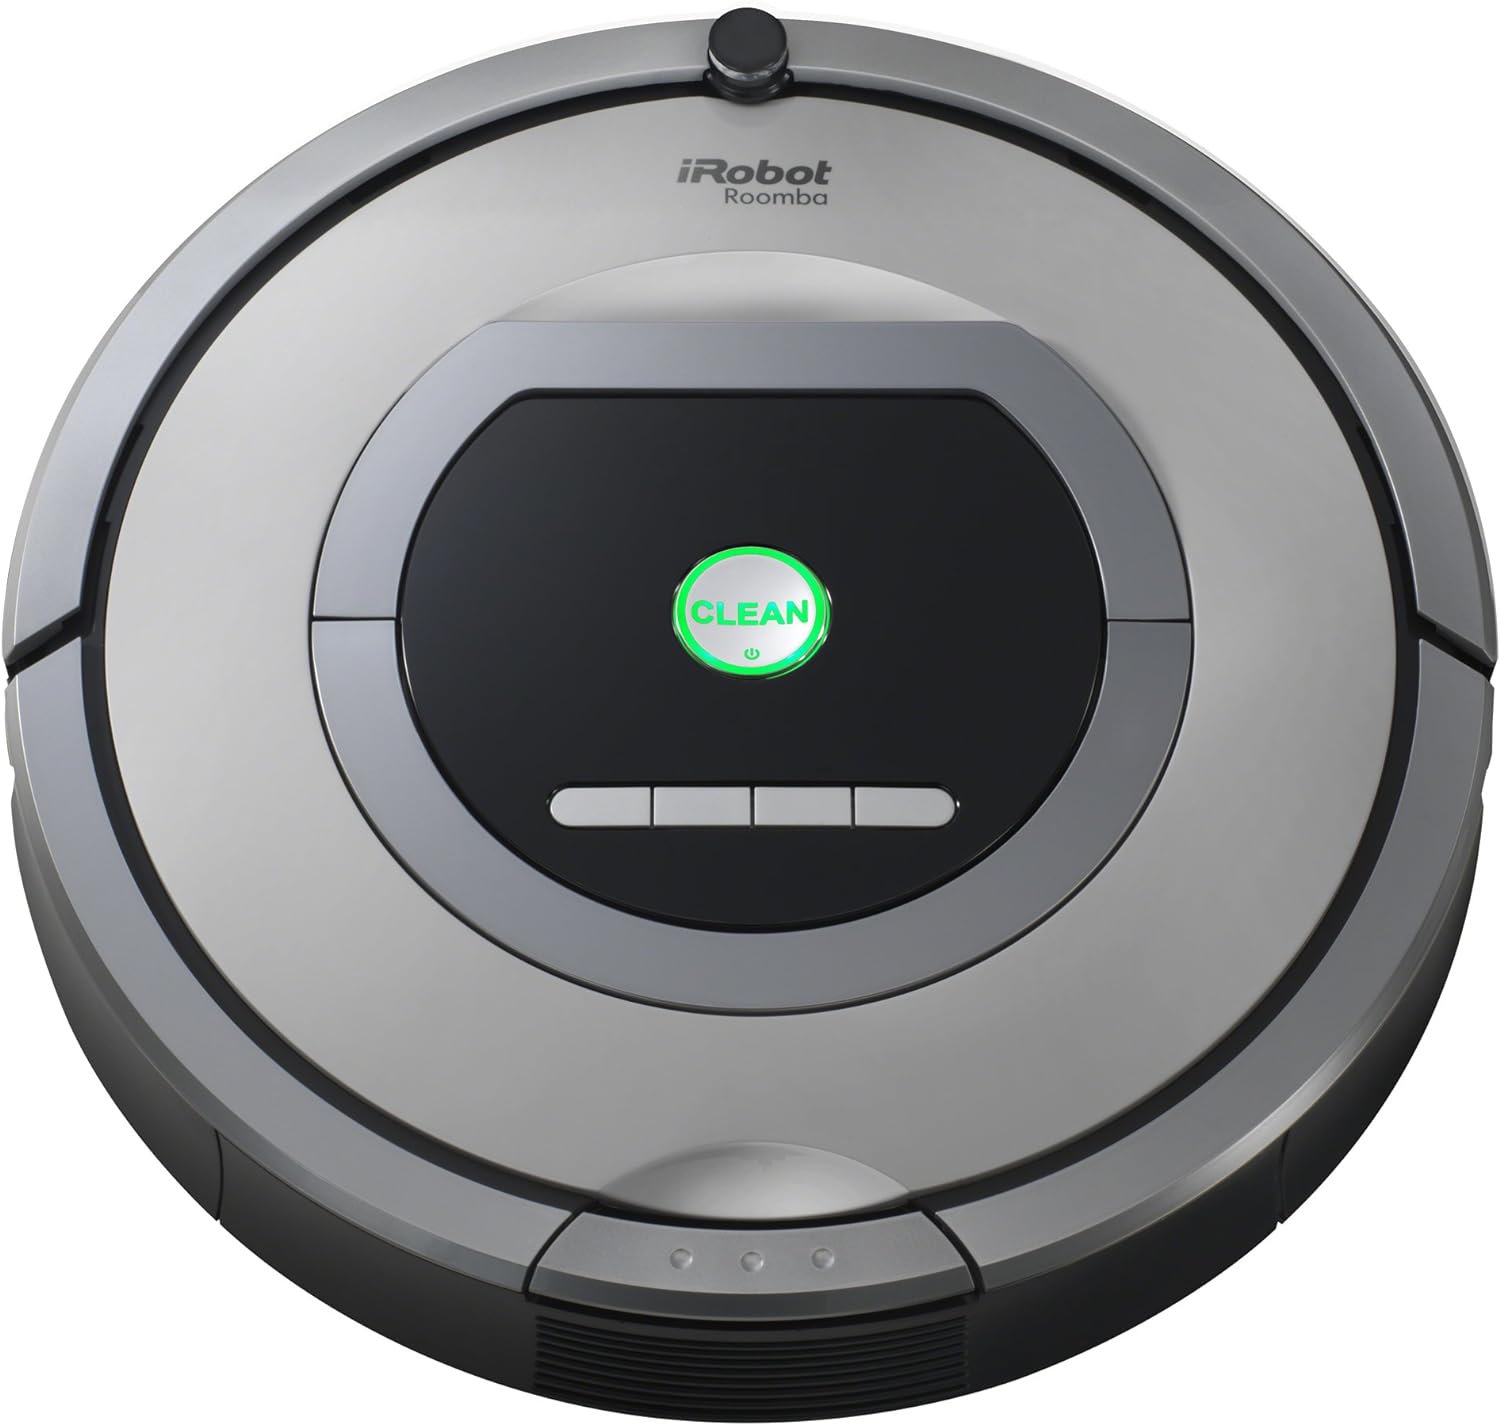 iRobot Roomba 761